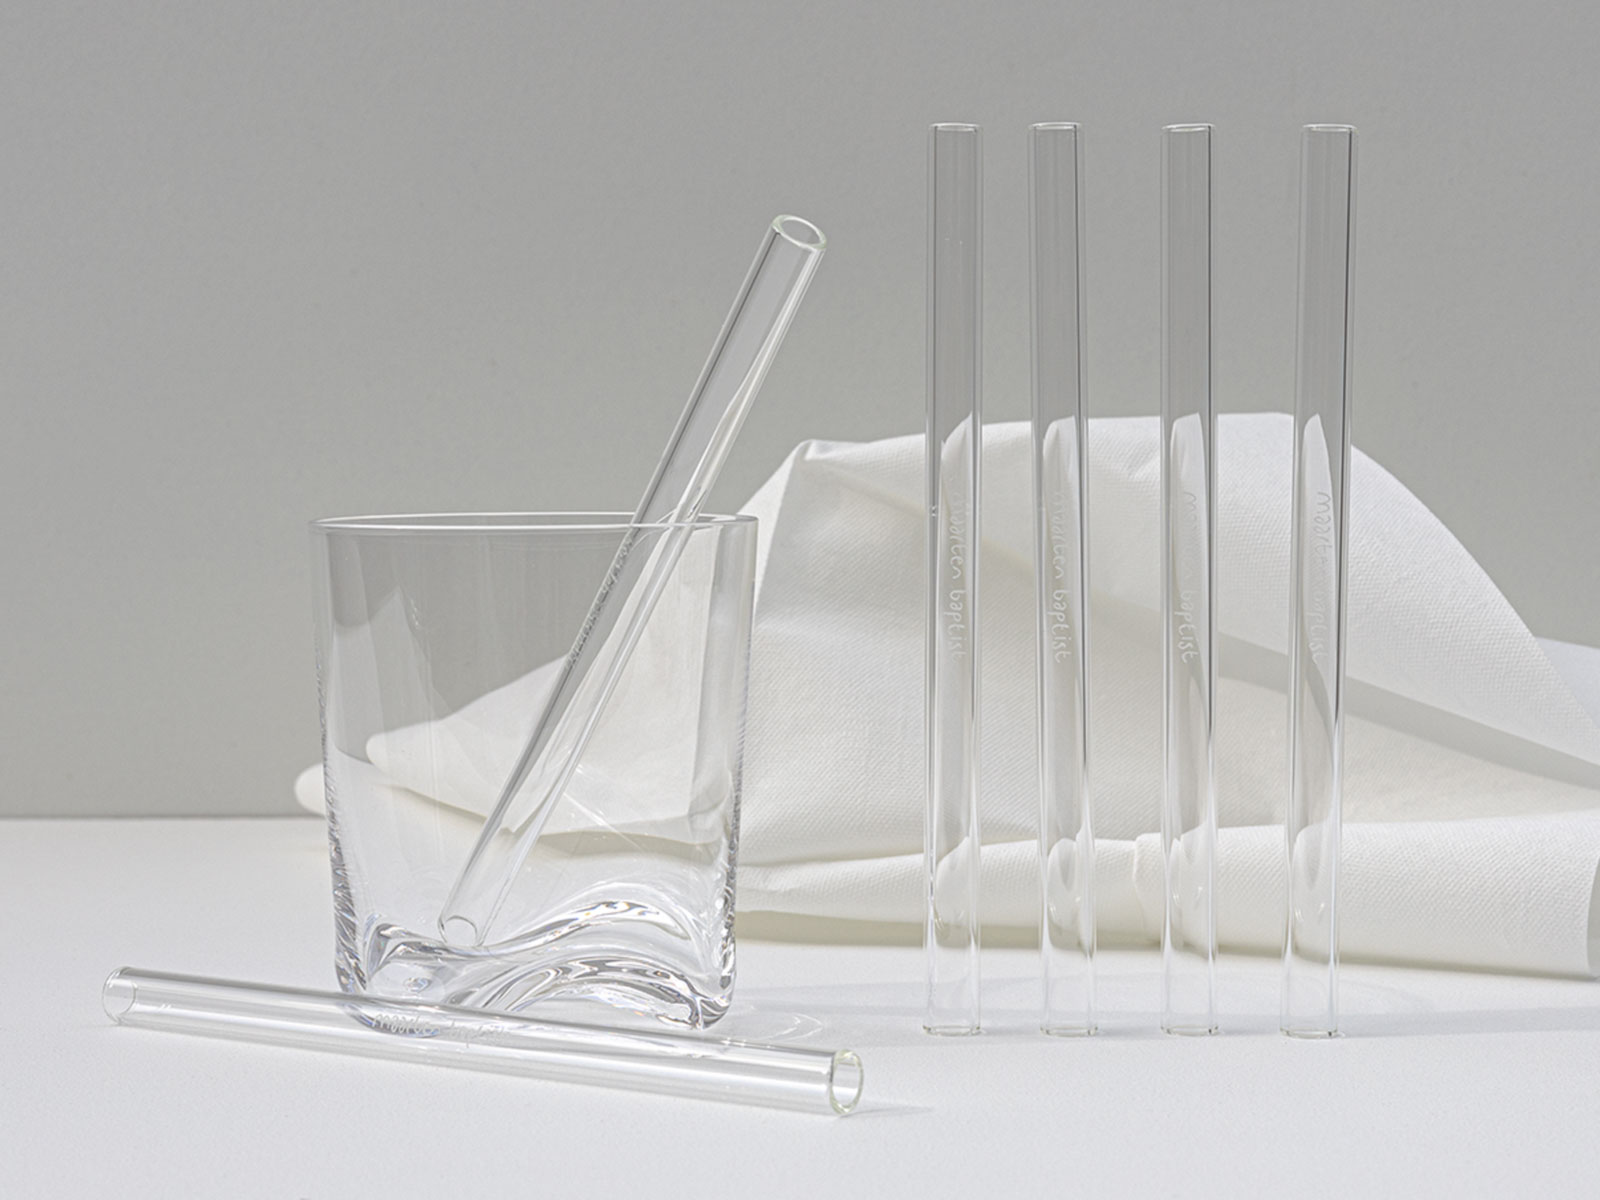 Set of 12 crystal clear glass straws 16cm / 6inch